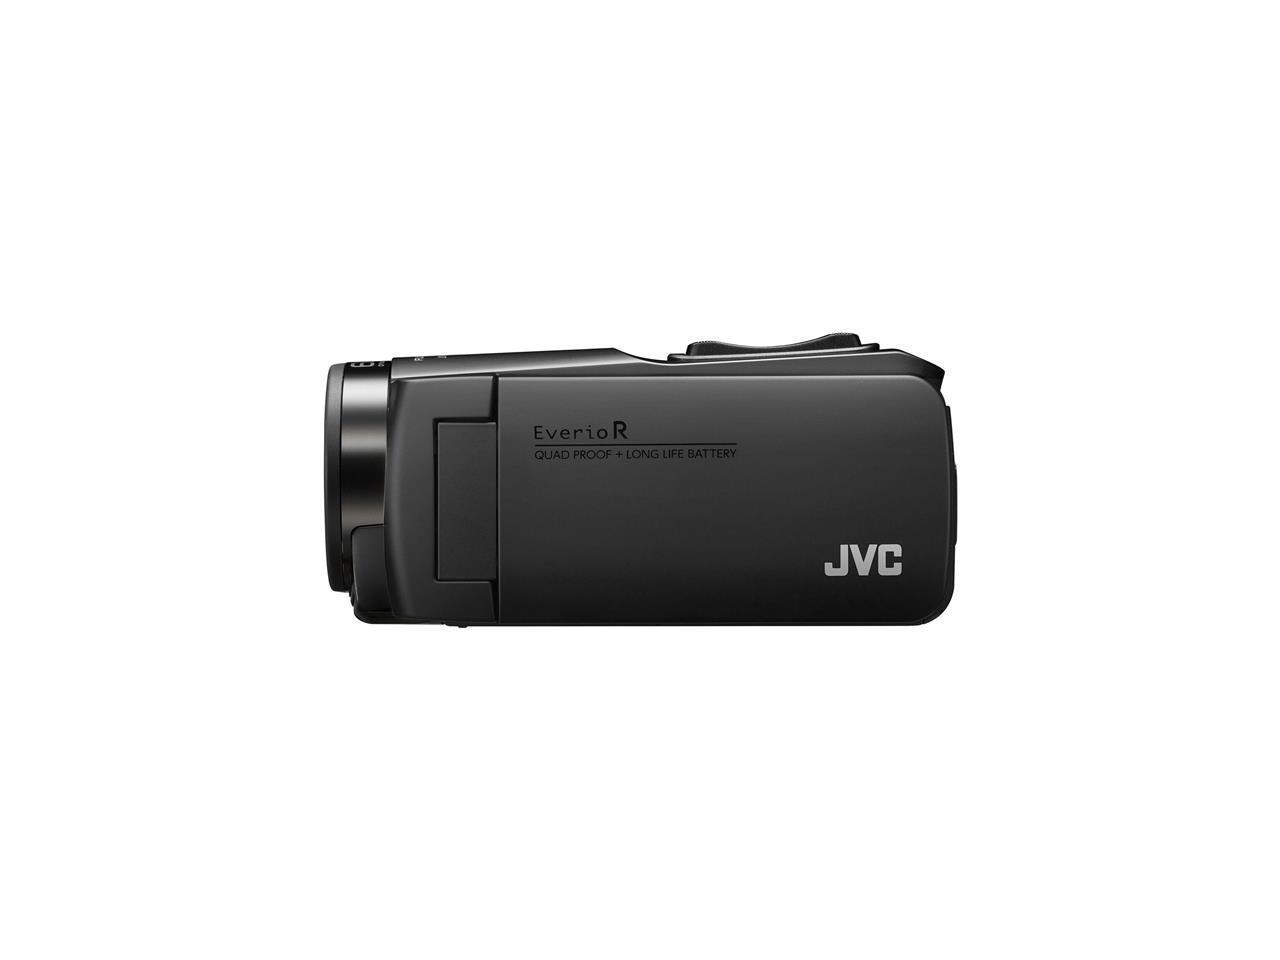 JVC GZ-R460BUS EverioR Quad-Proof HD Camcorder with 4GB Internal Memory (Black)